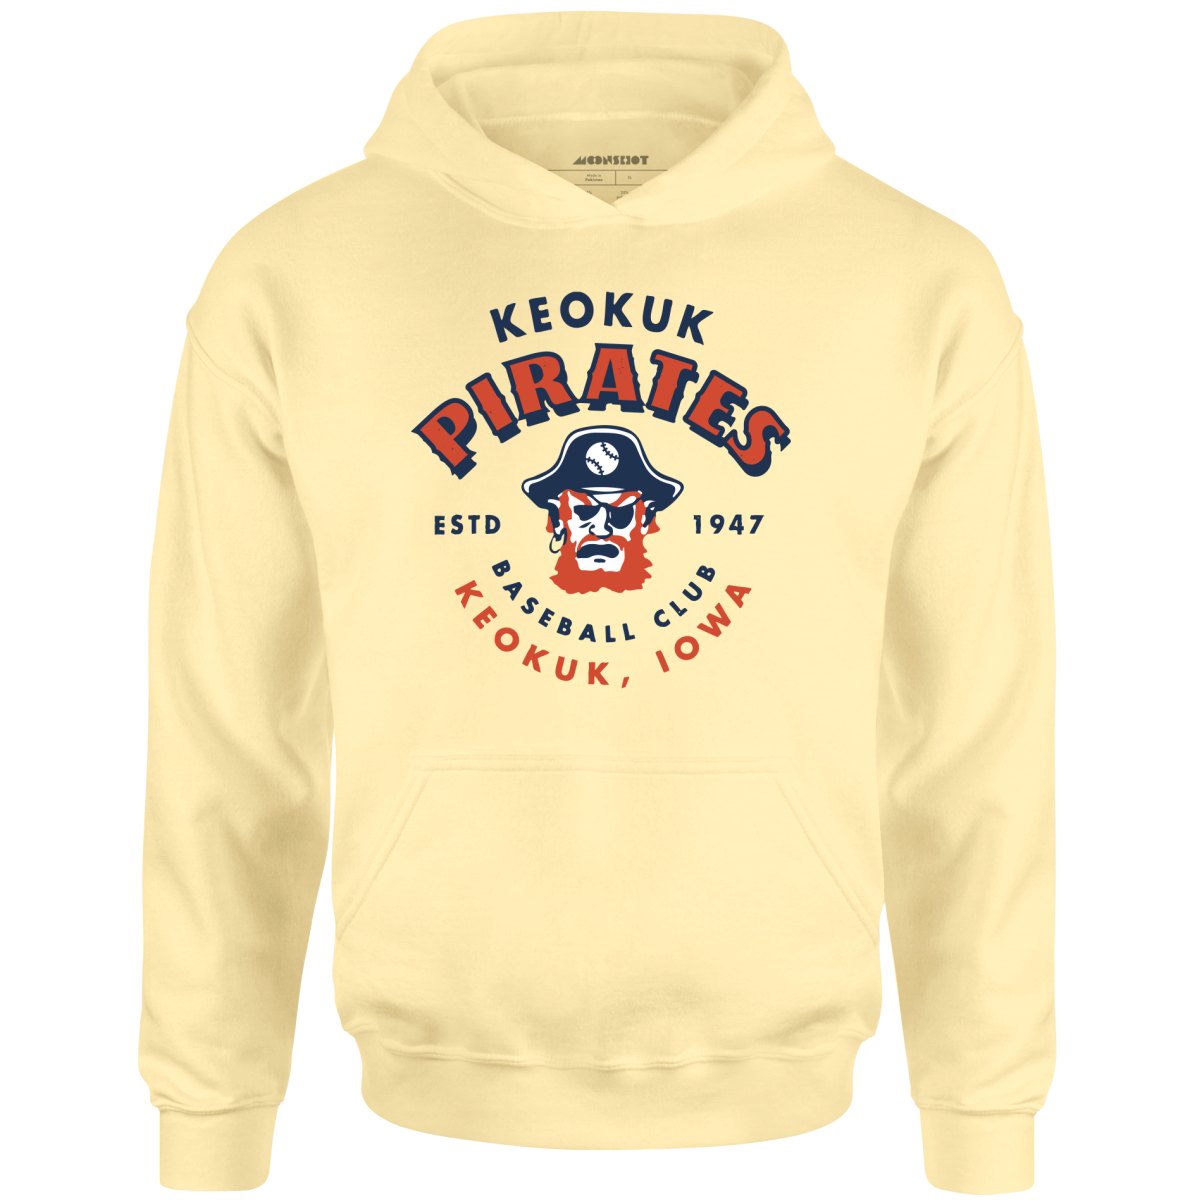 Keokuk Pirates - Iowa - Vintage Defunct Baseball Teams - Unisex Hoodie